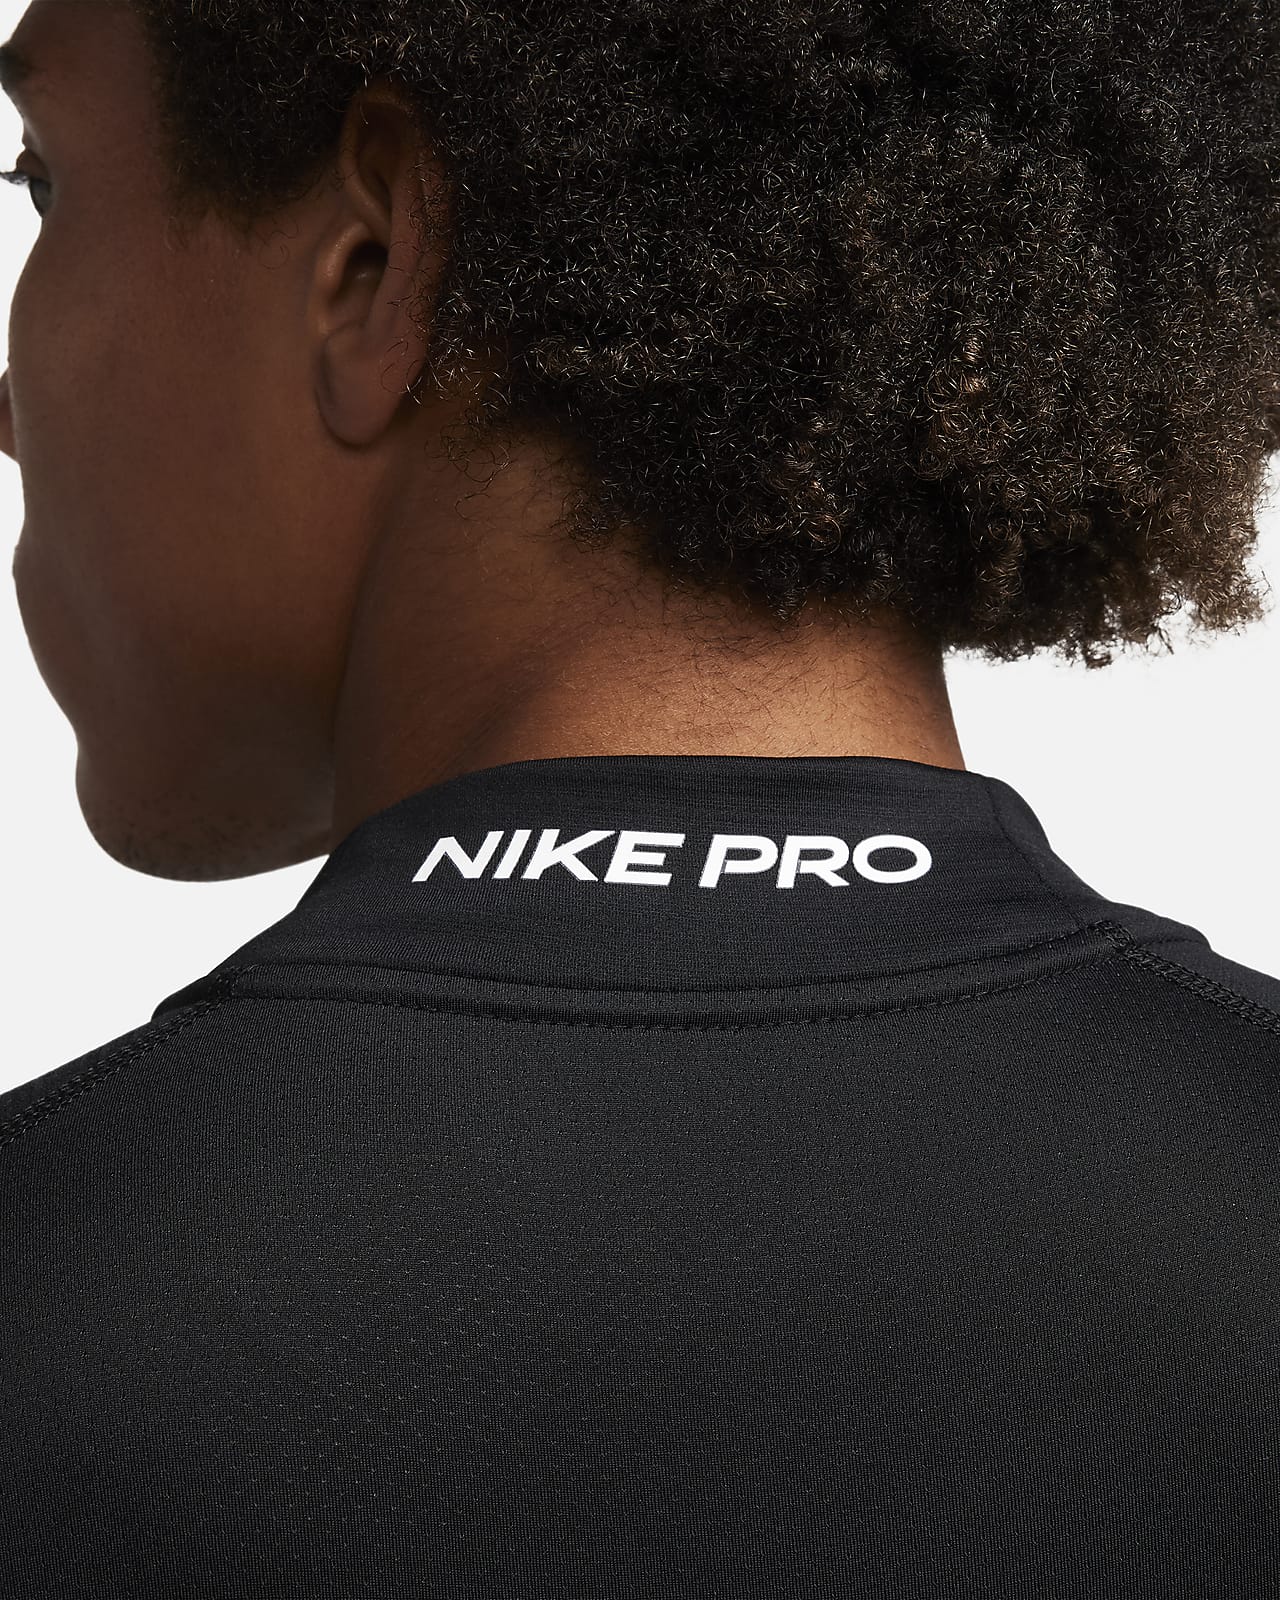 Nike Pro Combat PADDED Compression Football Basketball TOP SHIRT M MEDIUM